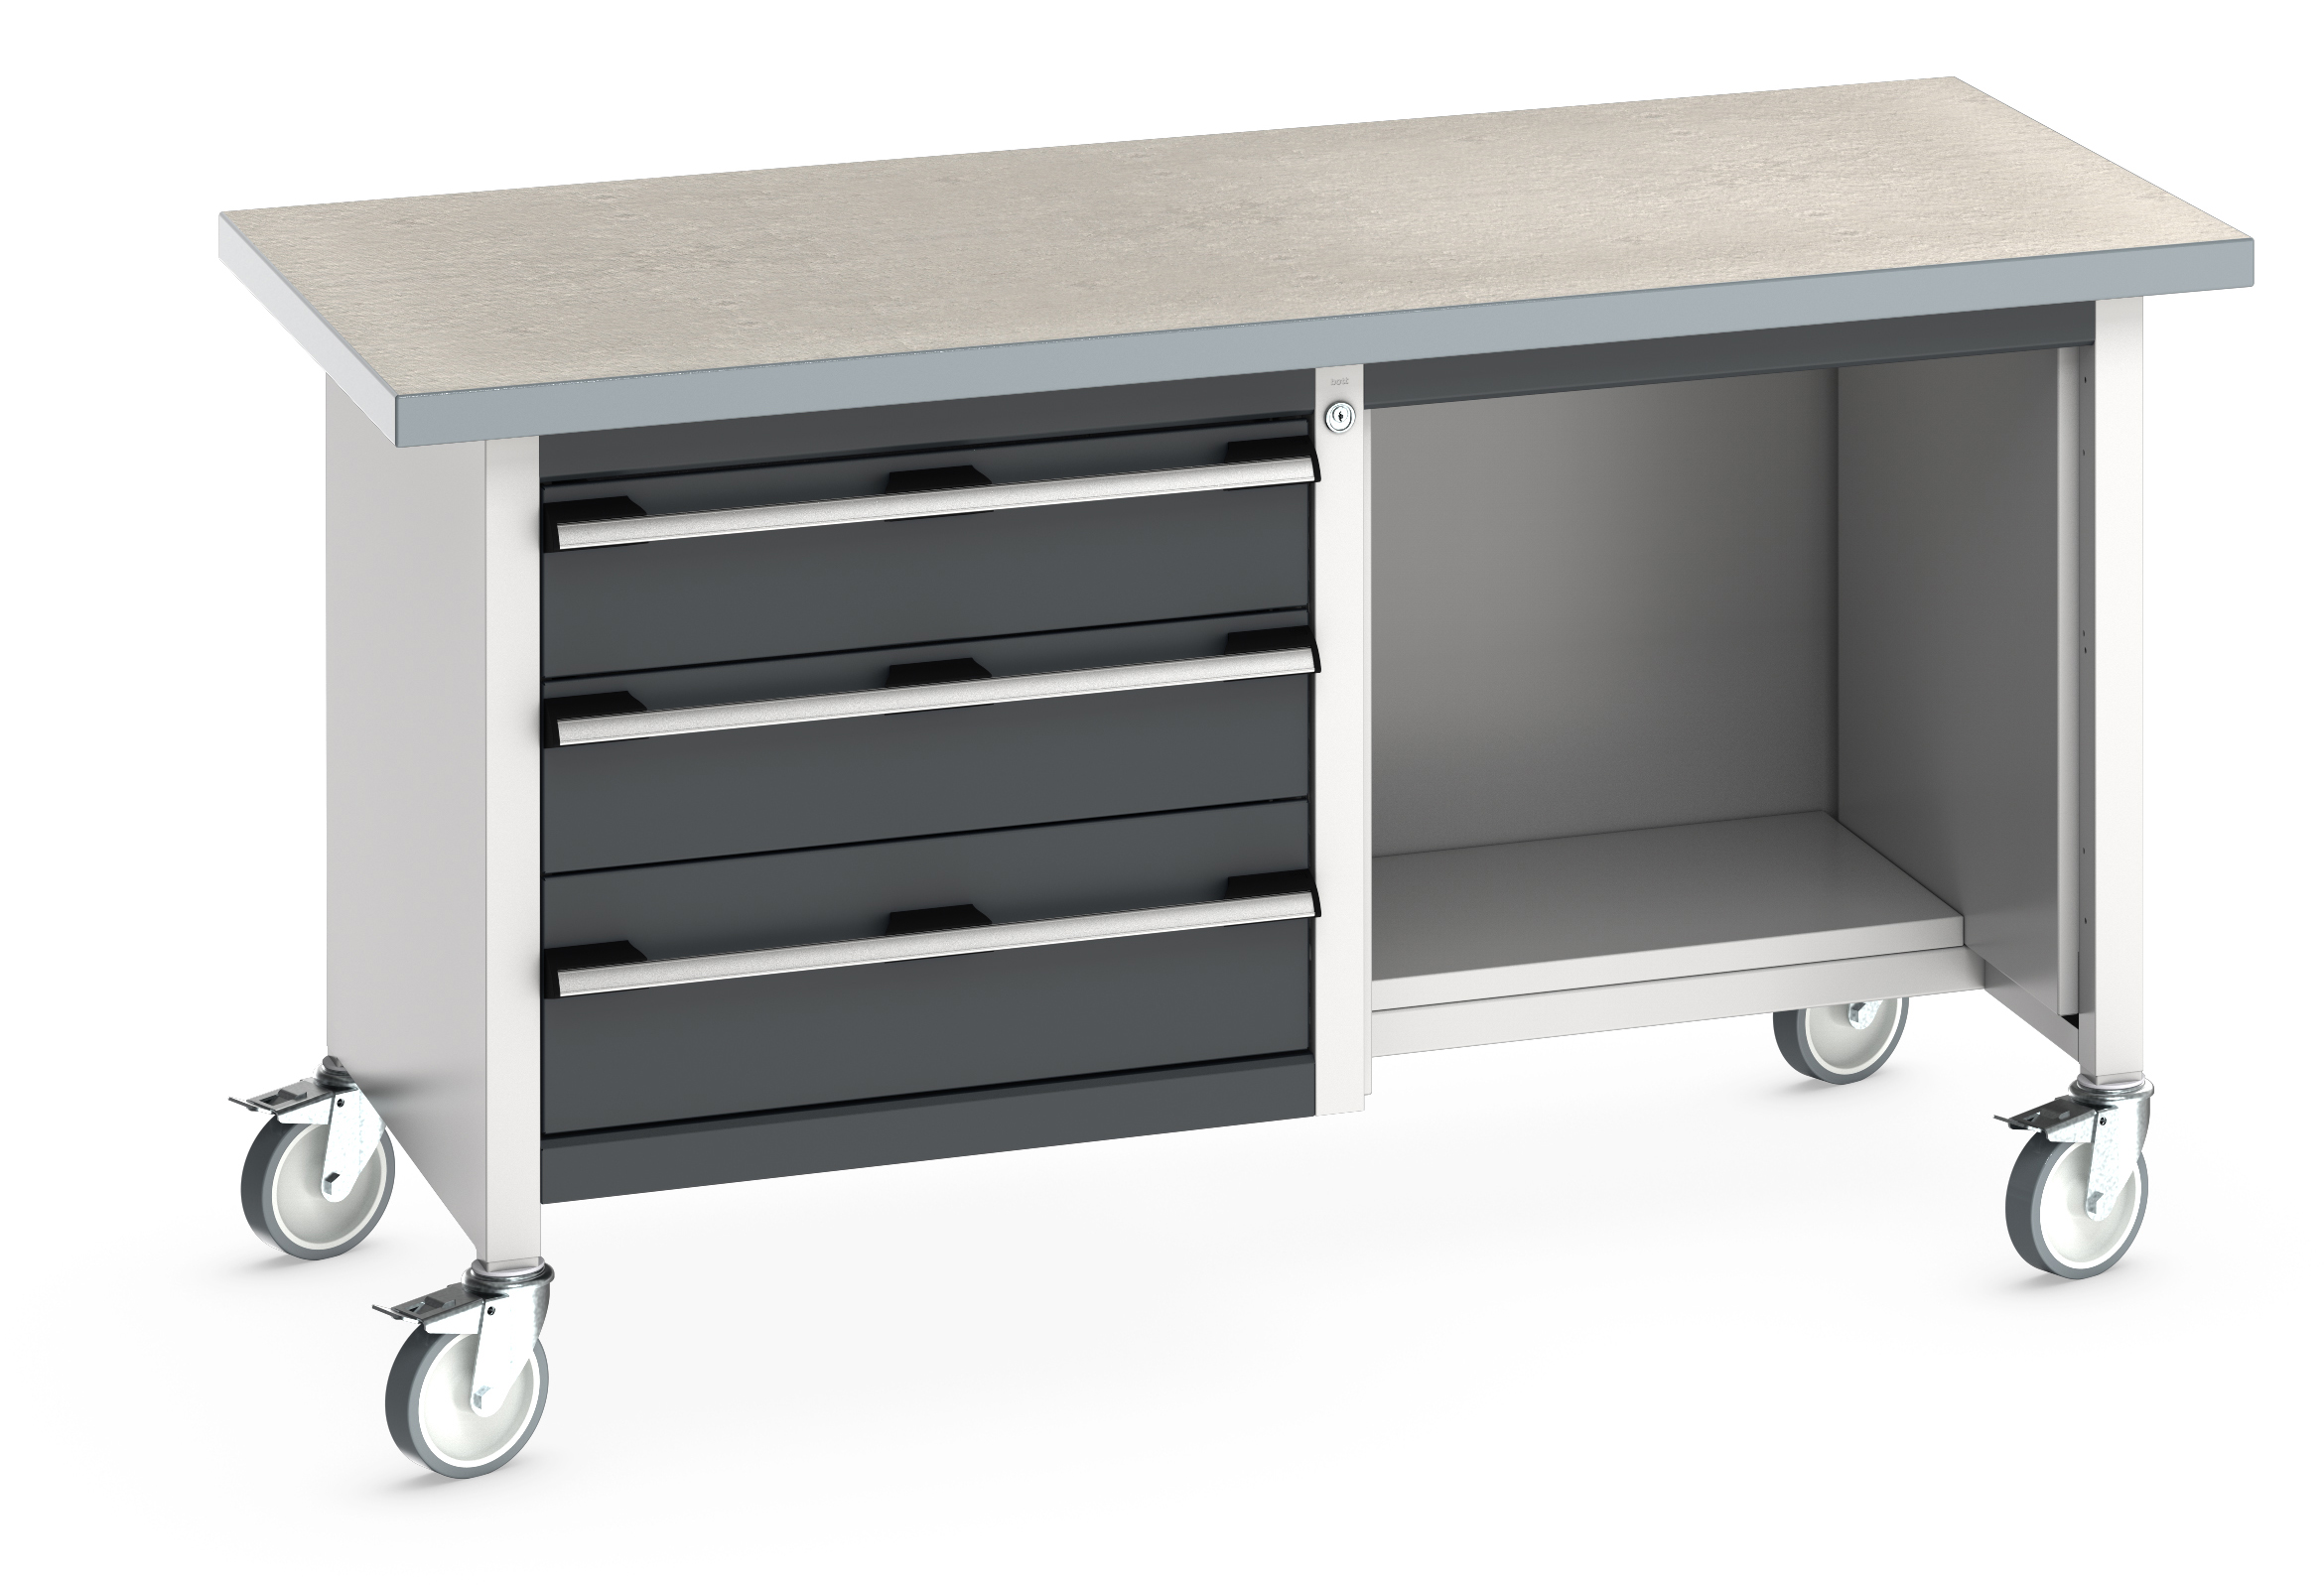 Bott Cubio Mobile Storage Bench With 3 Drawer Cabinet / Open With Half Depth Base Shelf - 41002117.19V